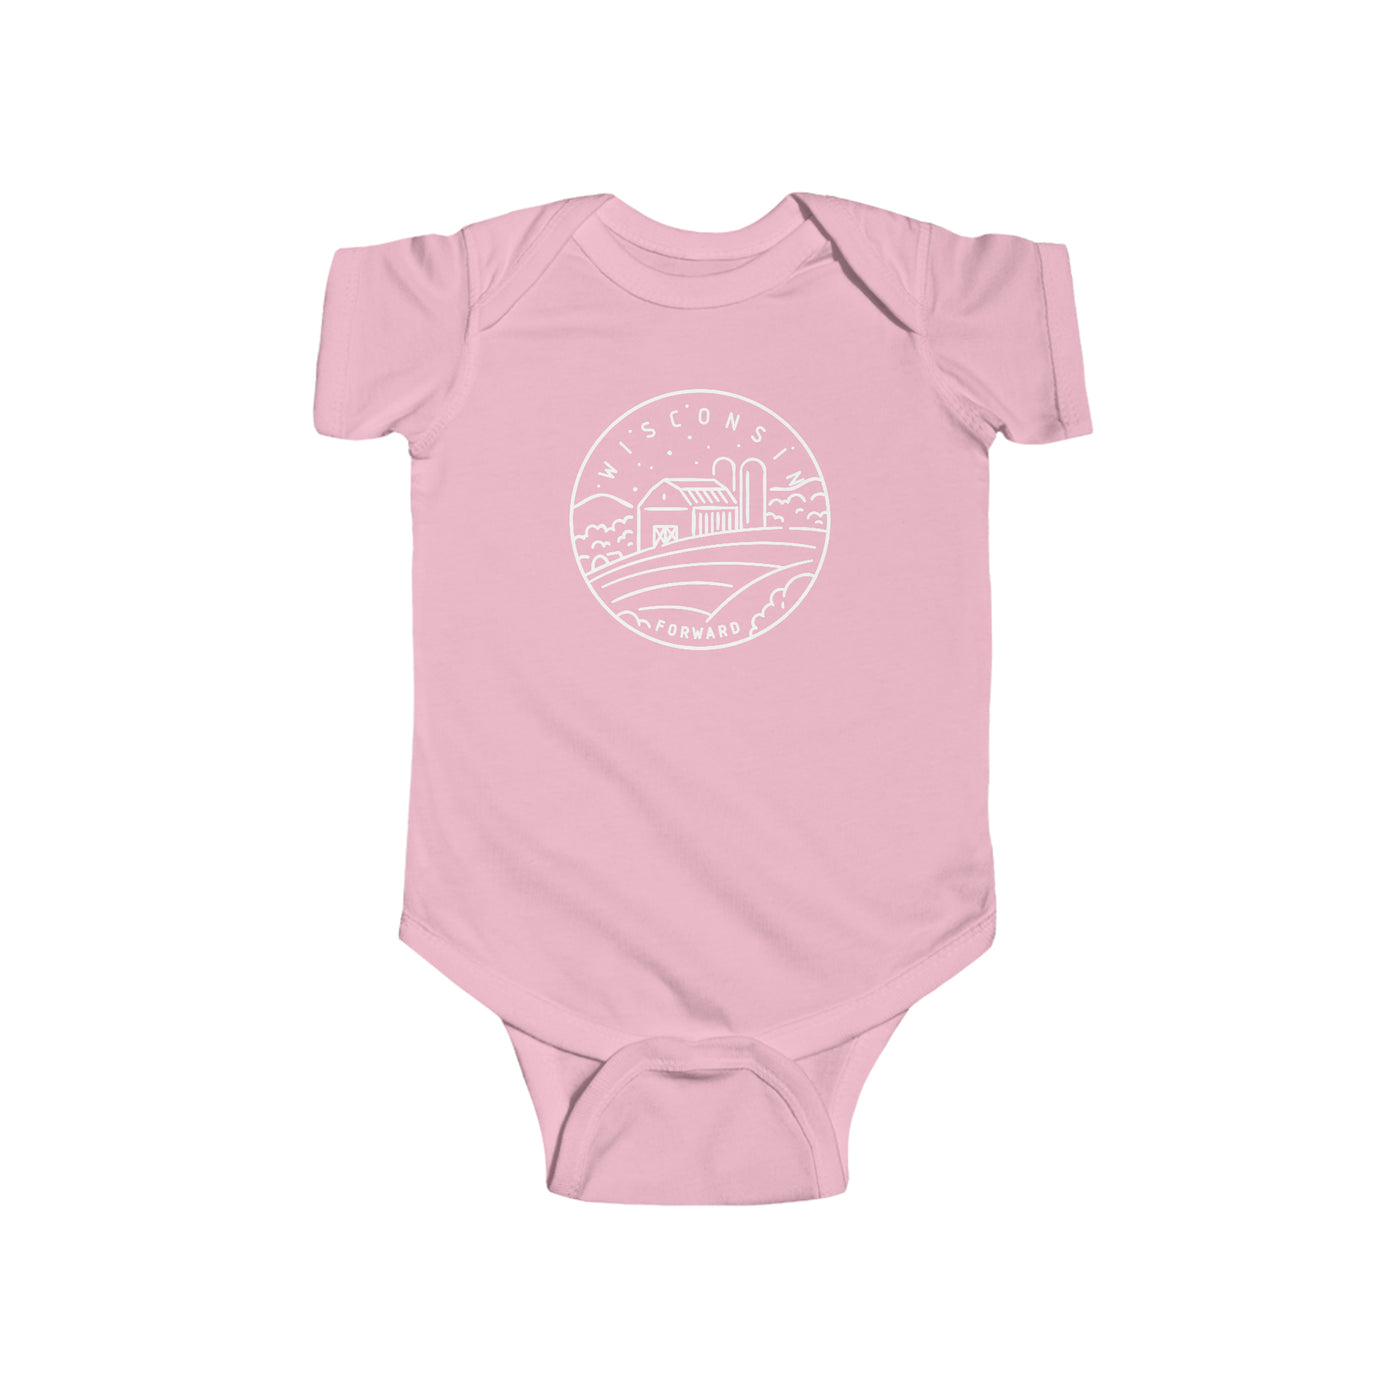 Wisconsin State Motto Baby Bodysuit